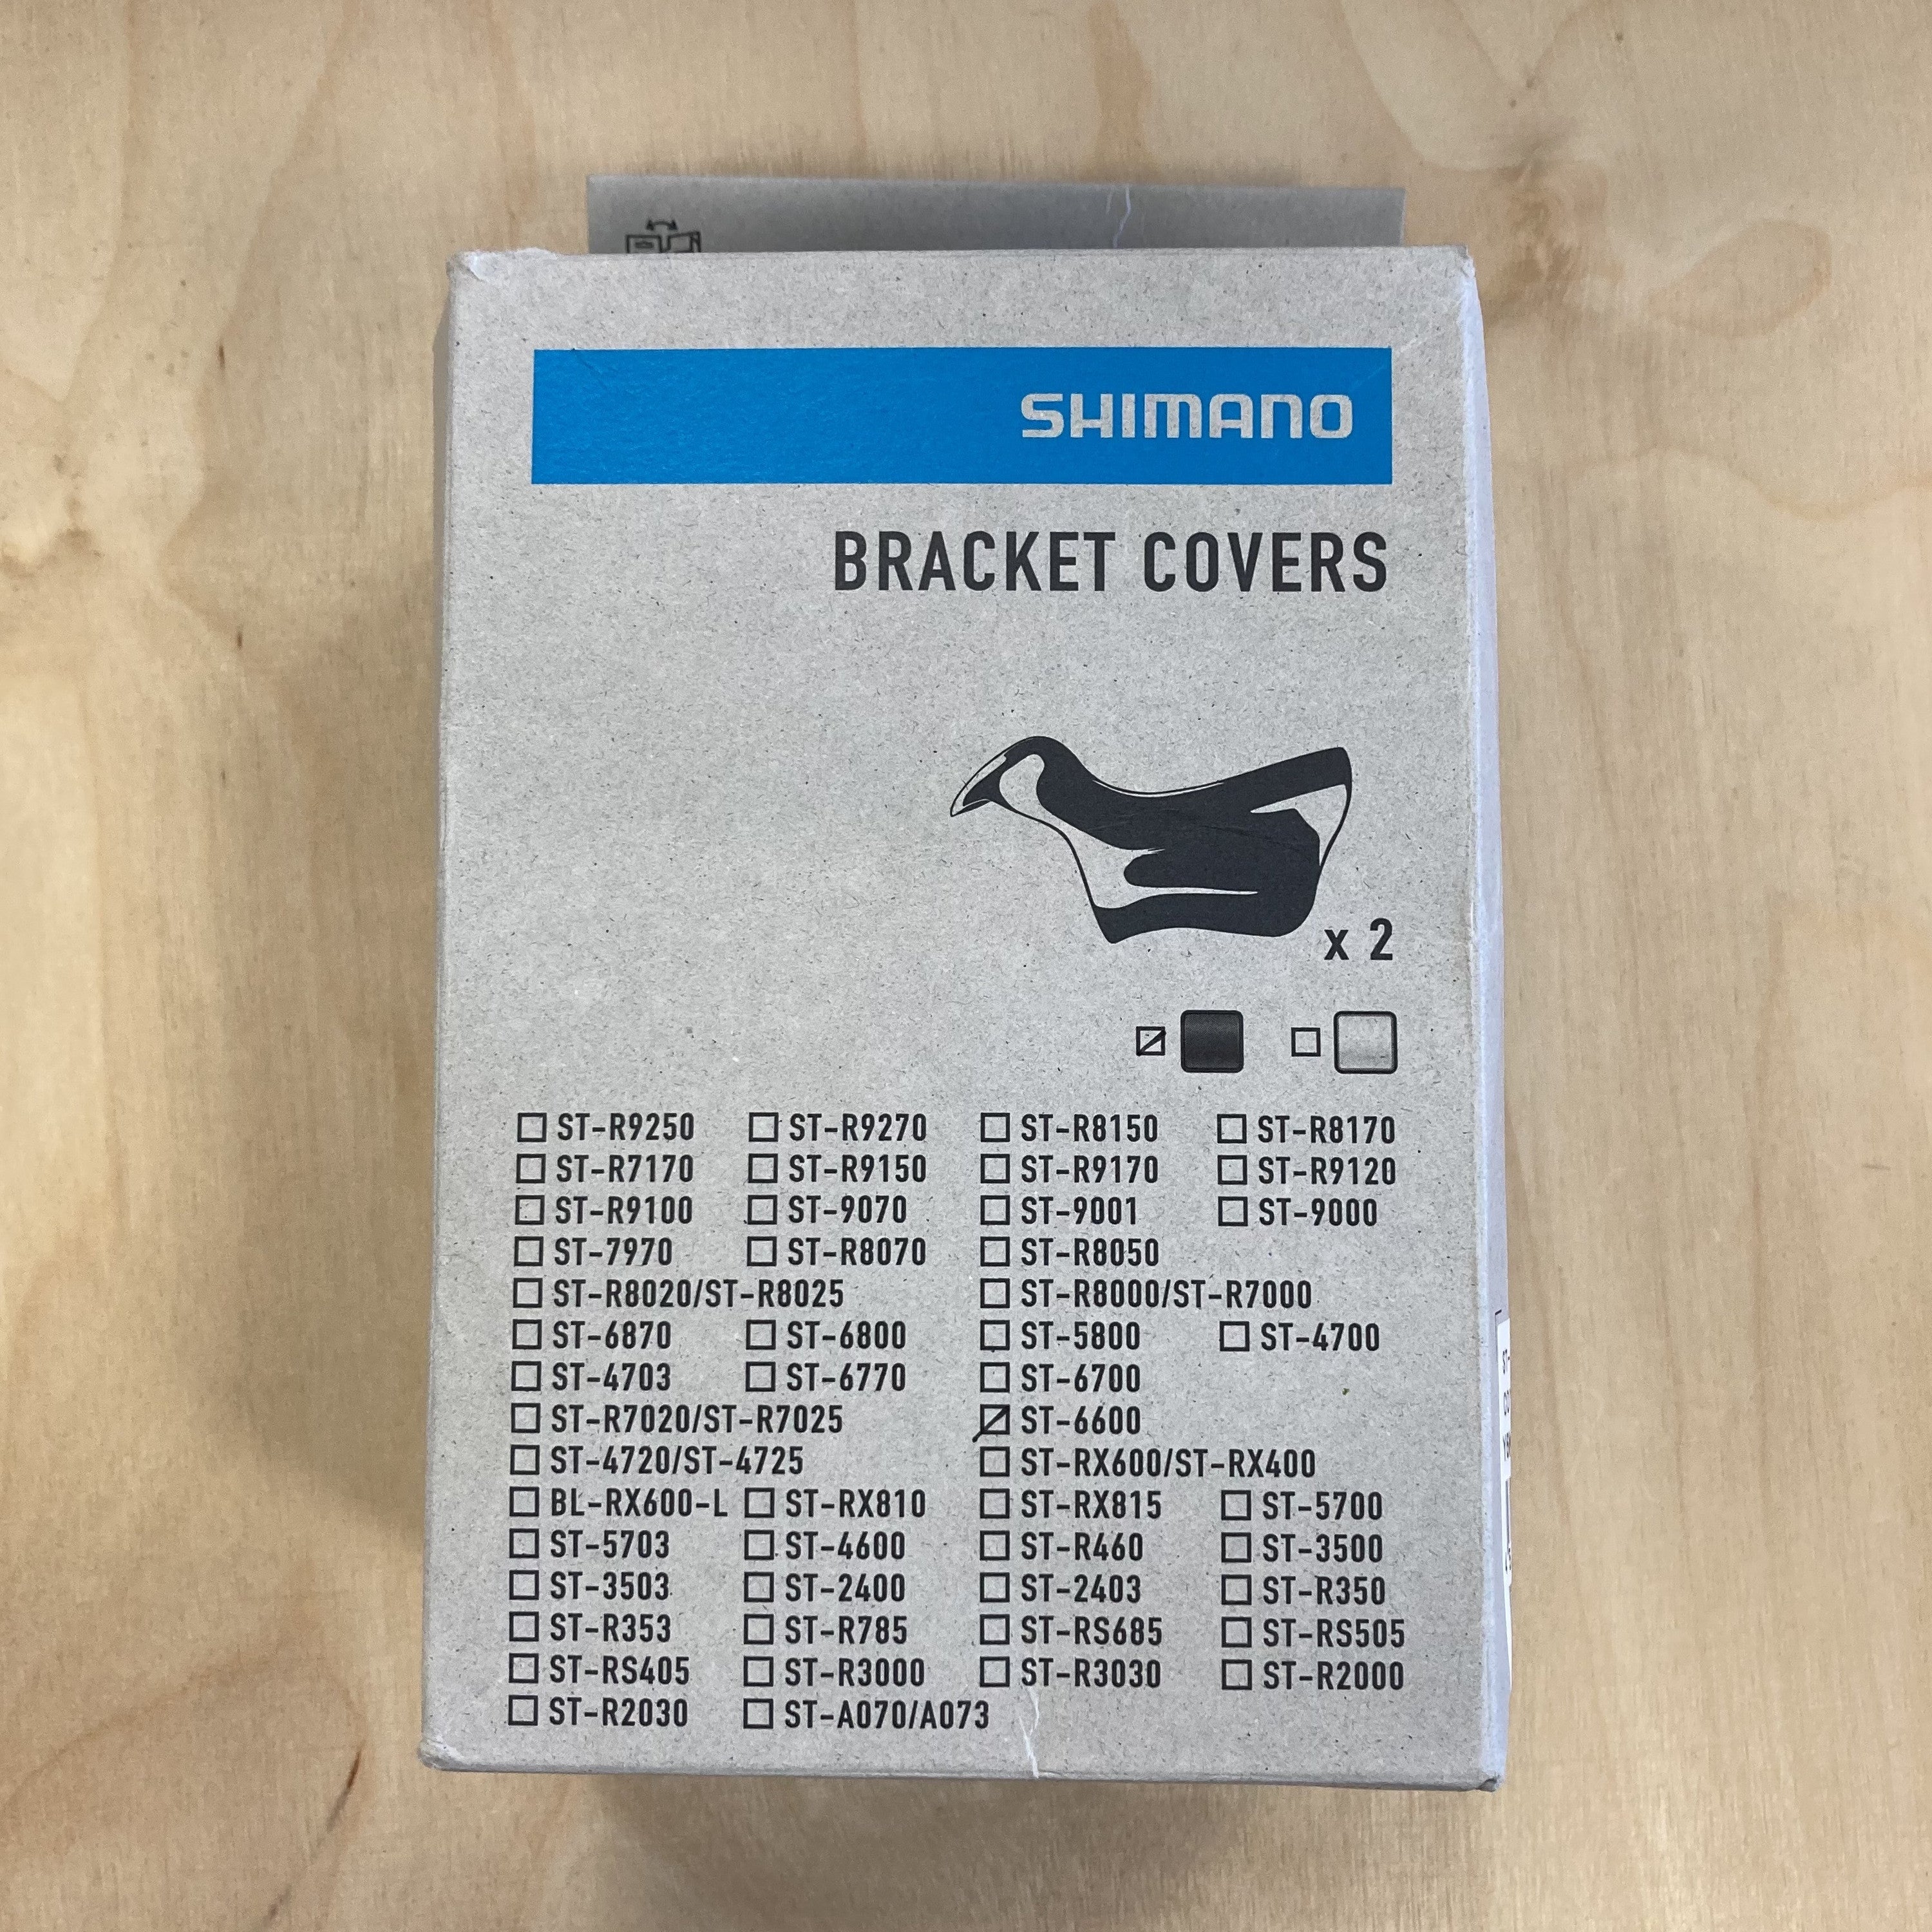 Shimano ST-6600 Ultegra Bracket Covers Bike Shifter Spare Part